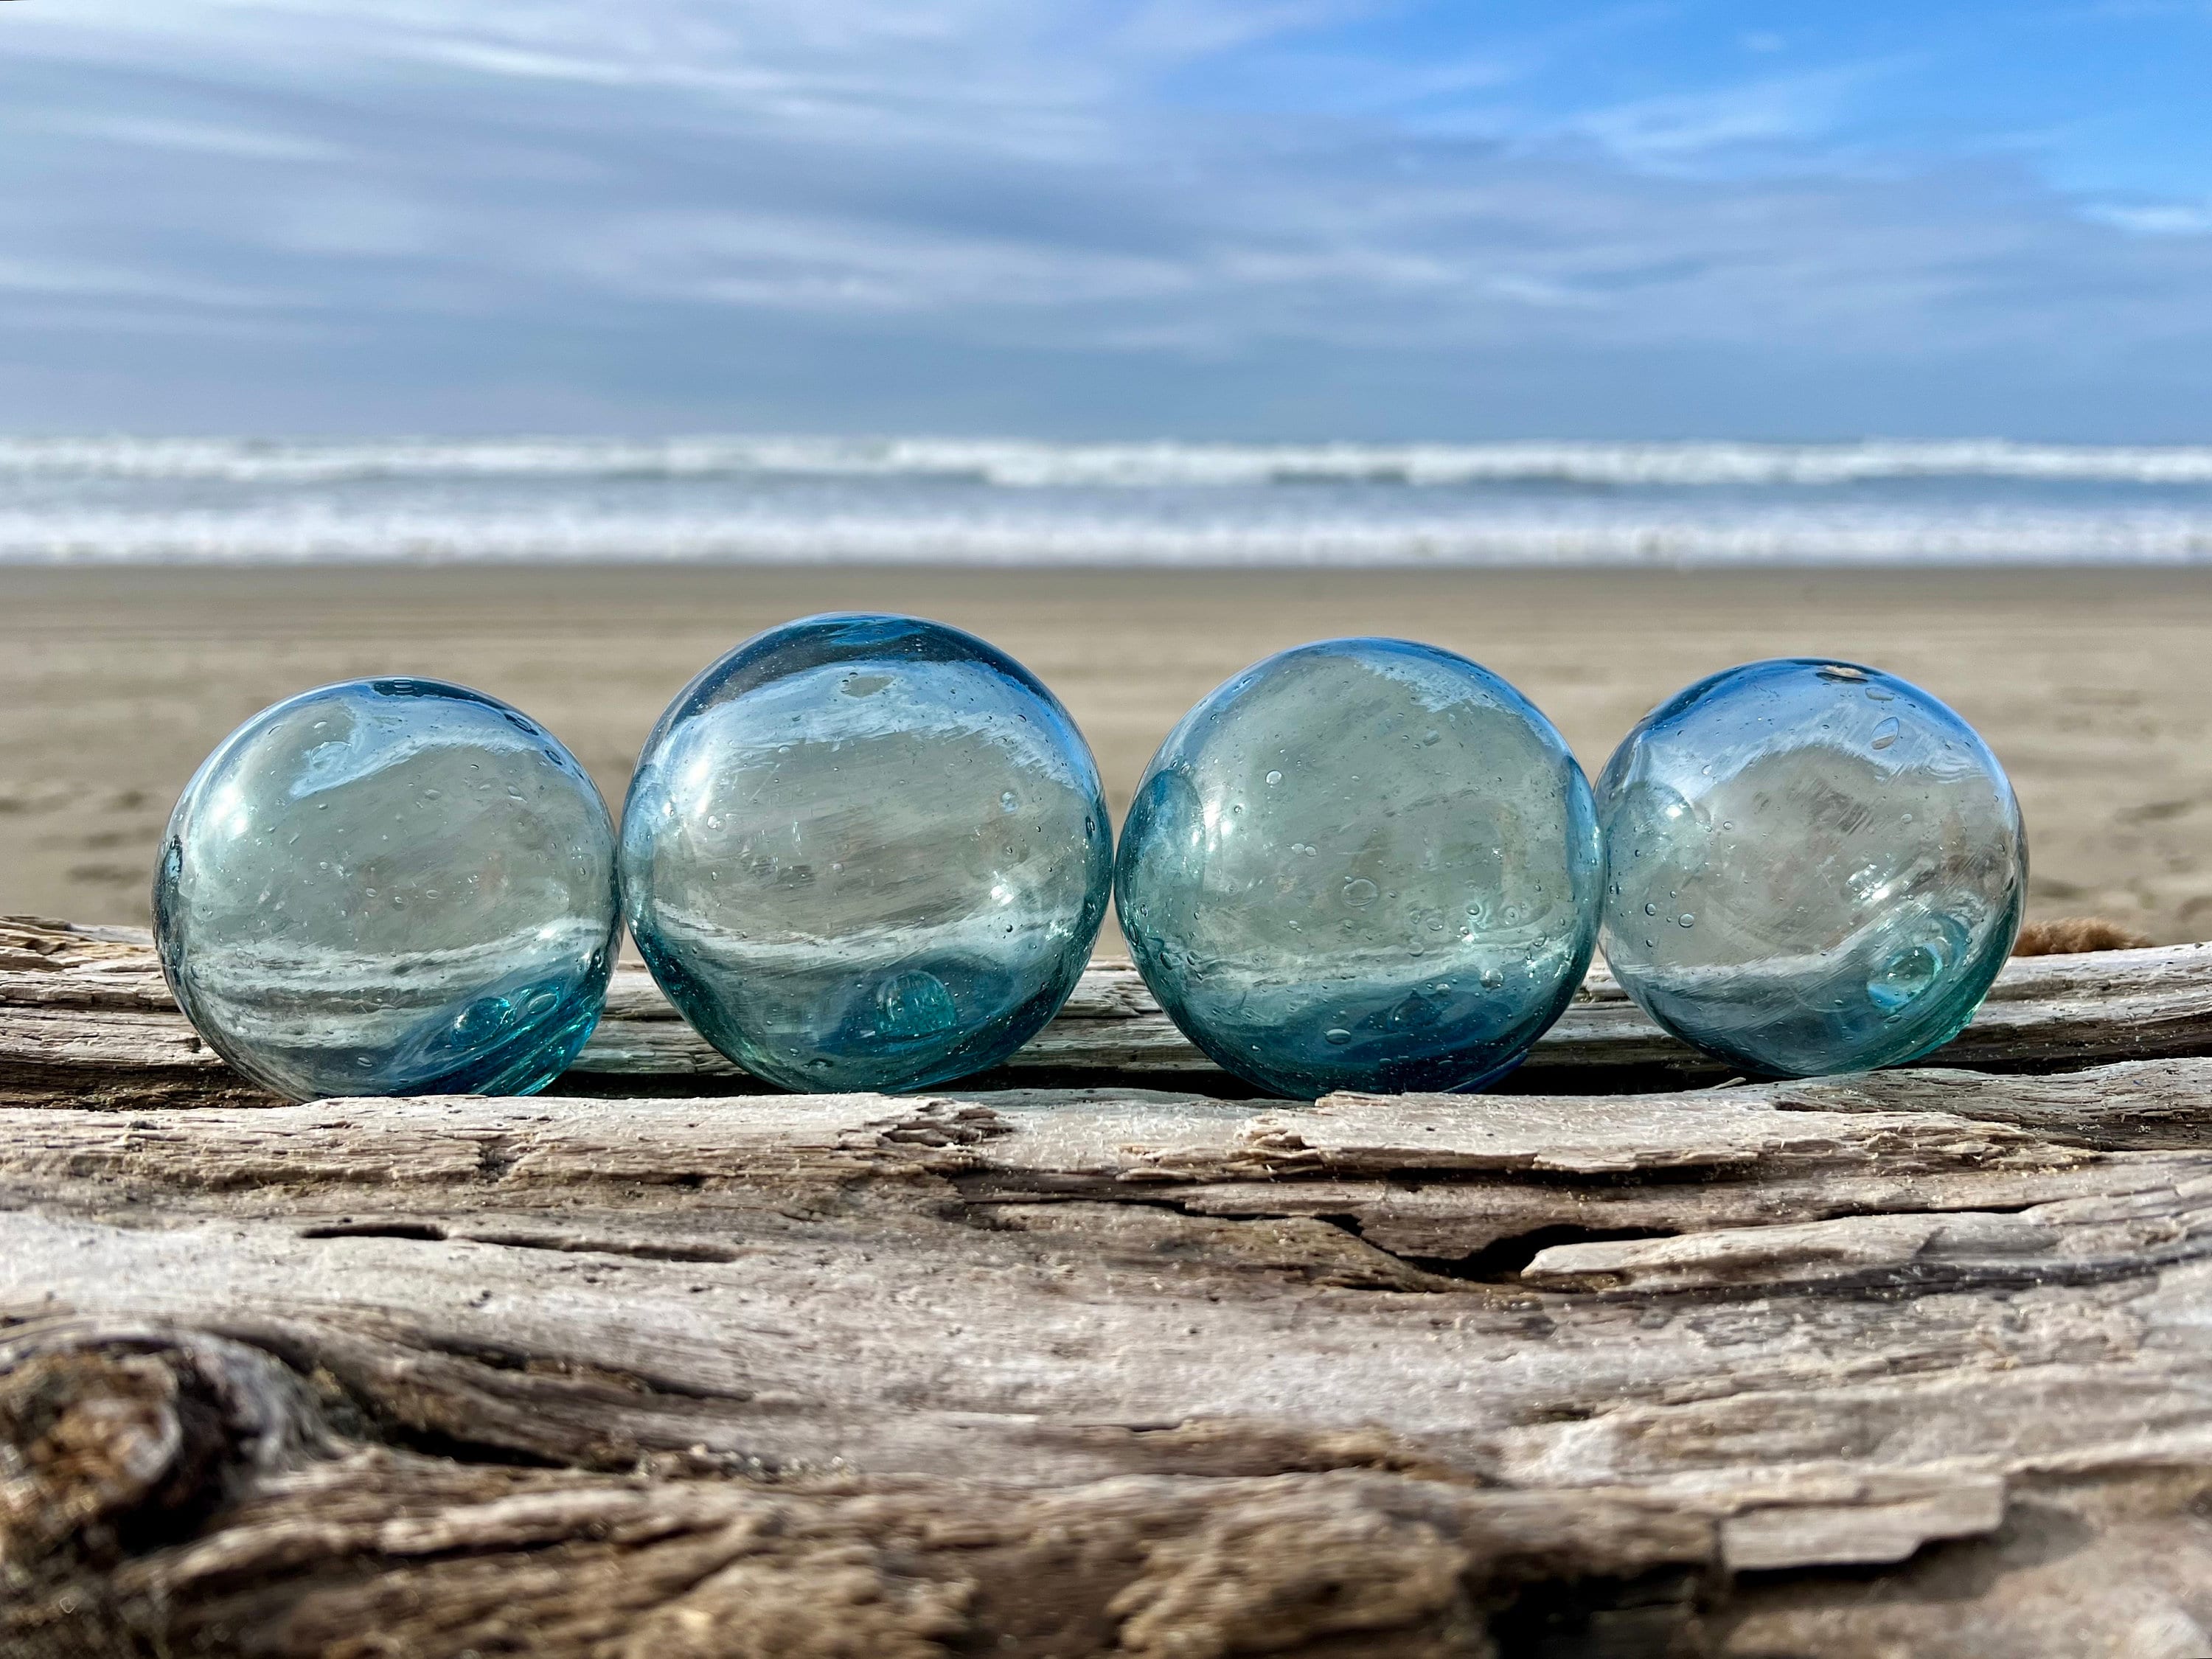 Blue Glass Fishing Floats Photograph by Cheryl Moulton - Pixels